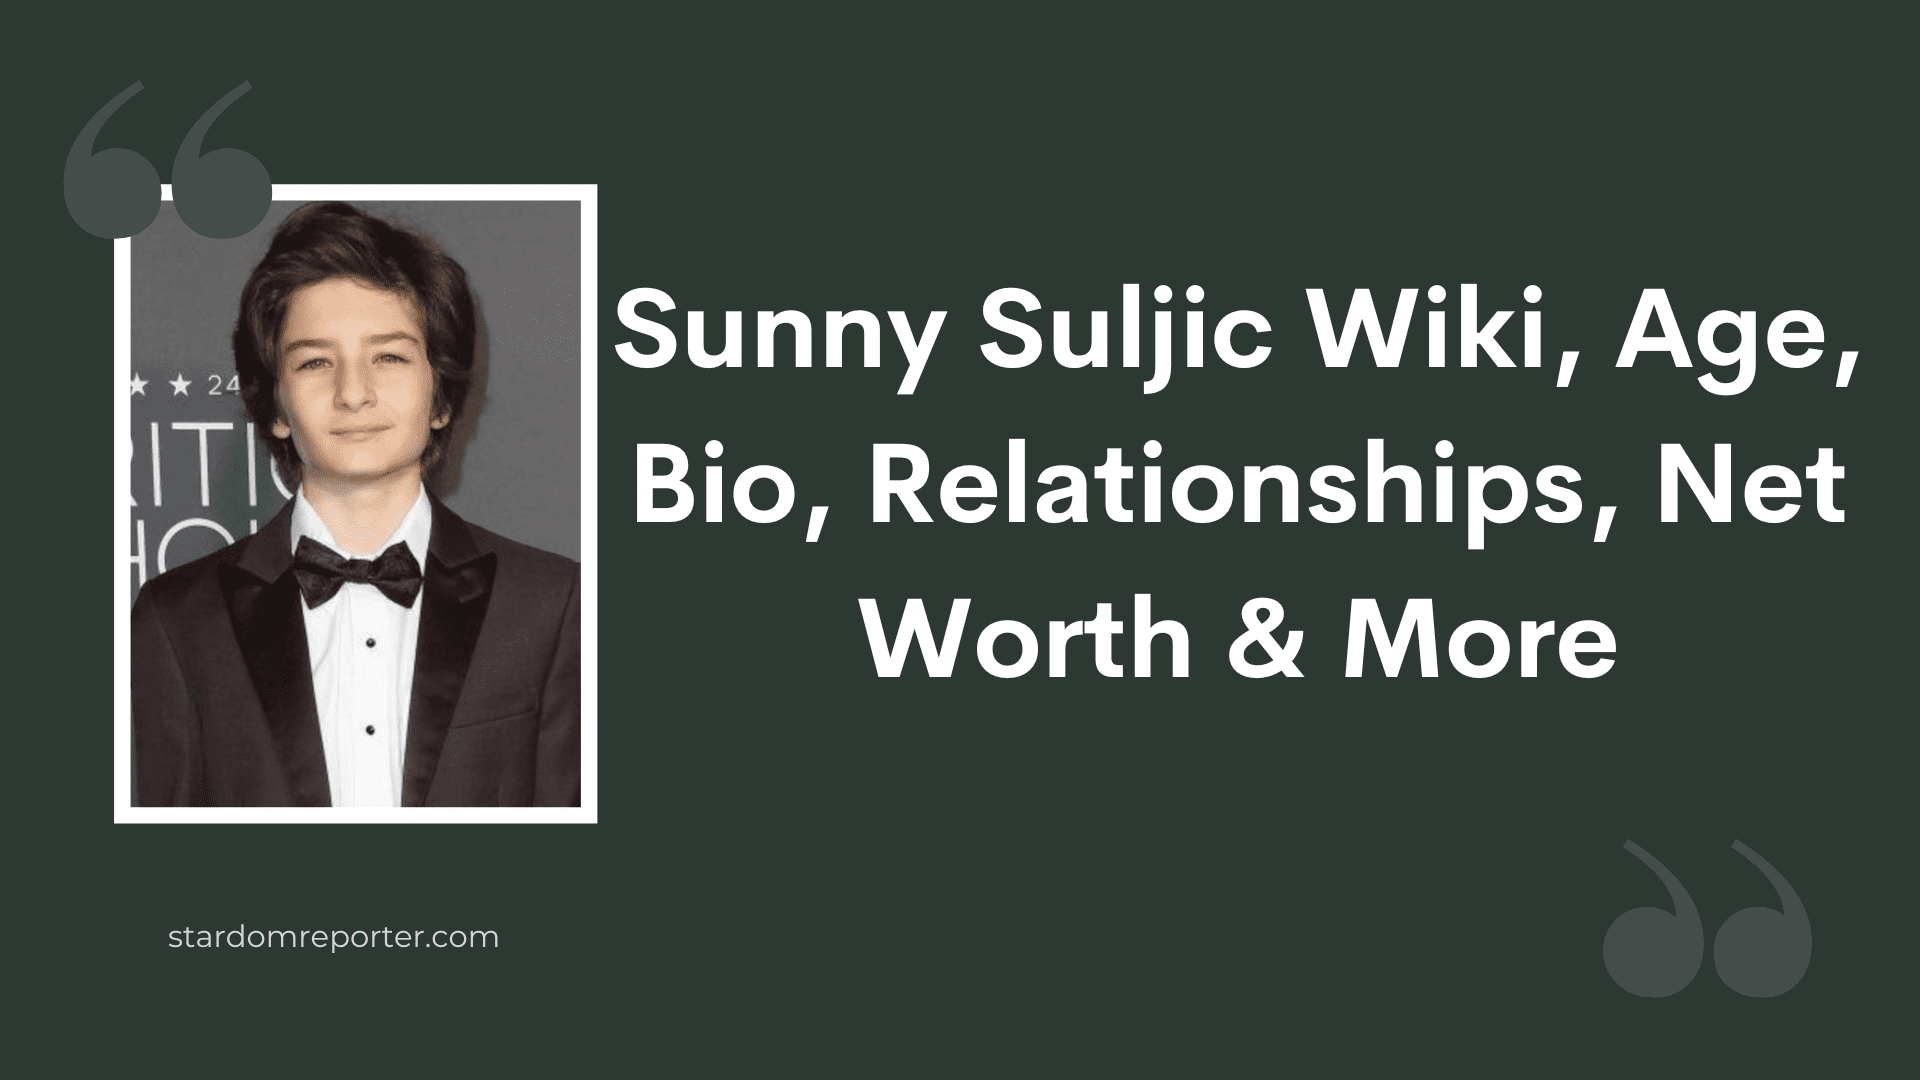 Sunny Suljic Wiki, Age, Bio, Relationships, Net Worth & More - 39